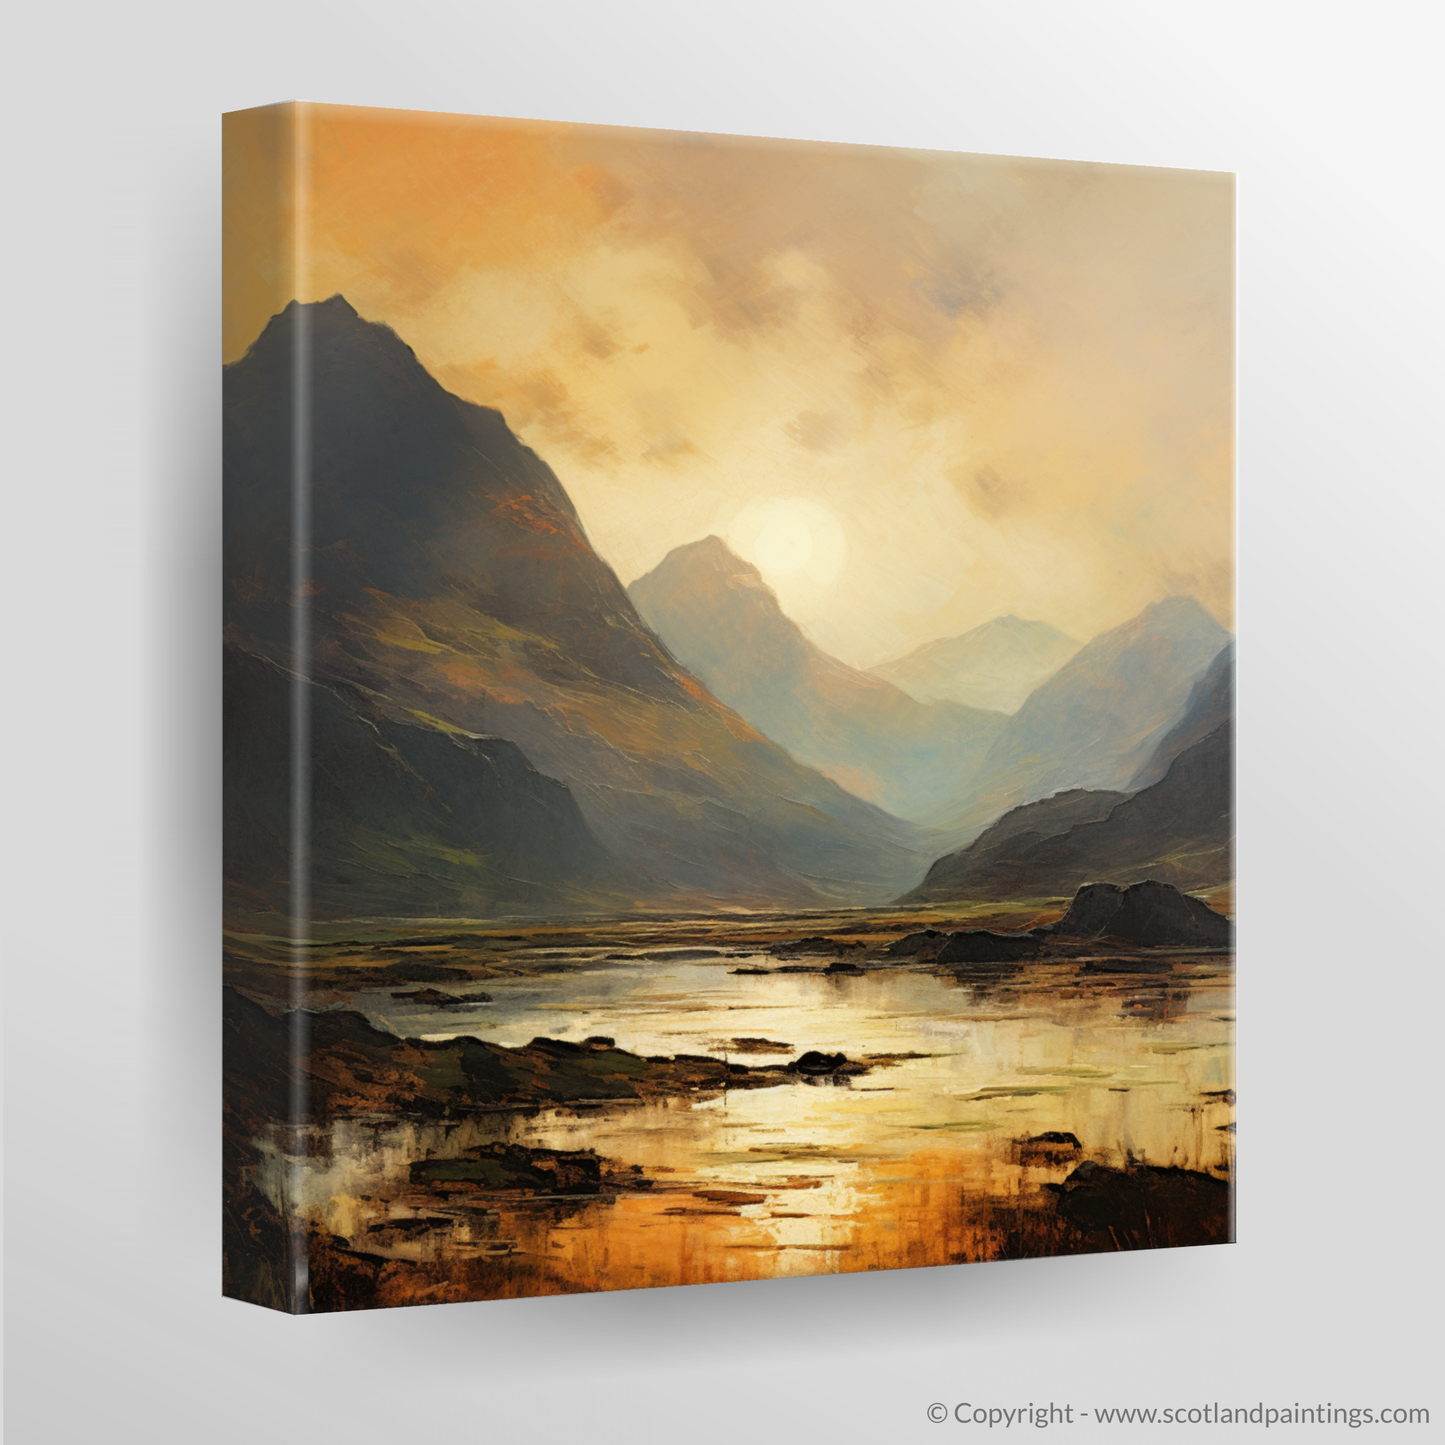 Twilight Tranquility: An Impressionist Homage to Glencoe's Peaks